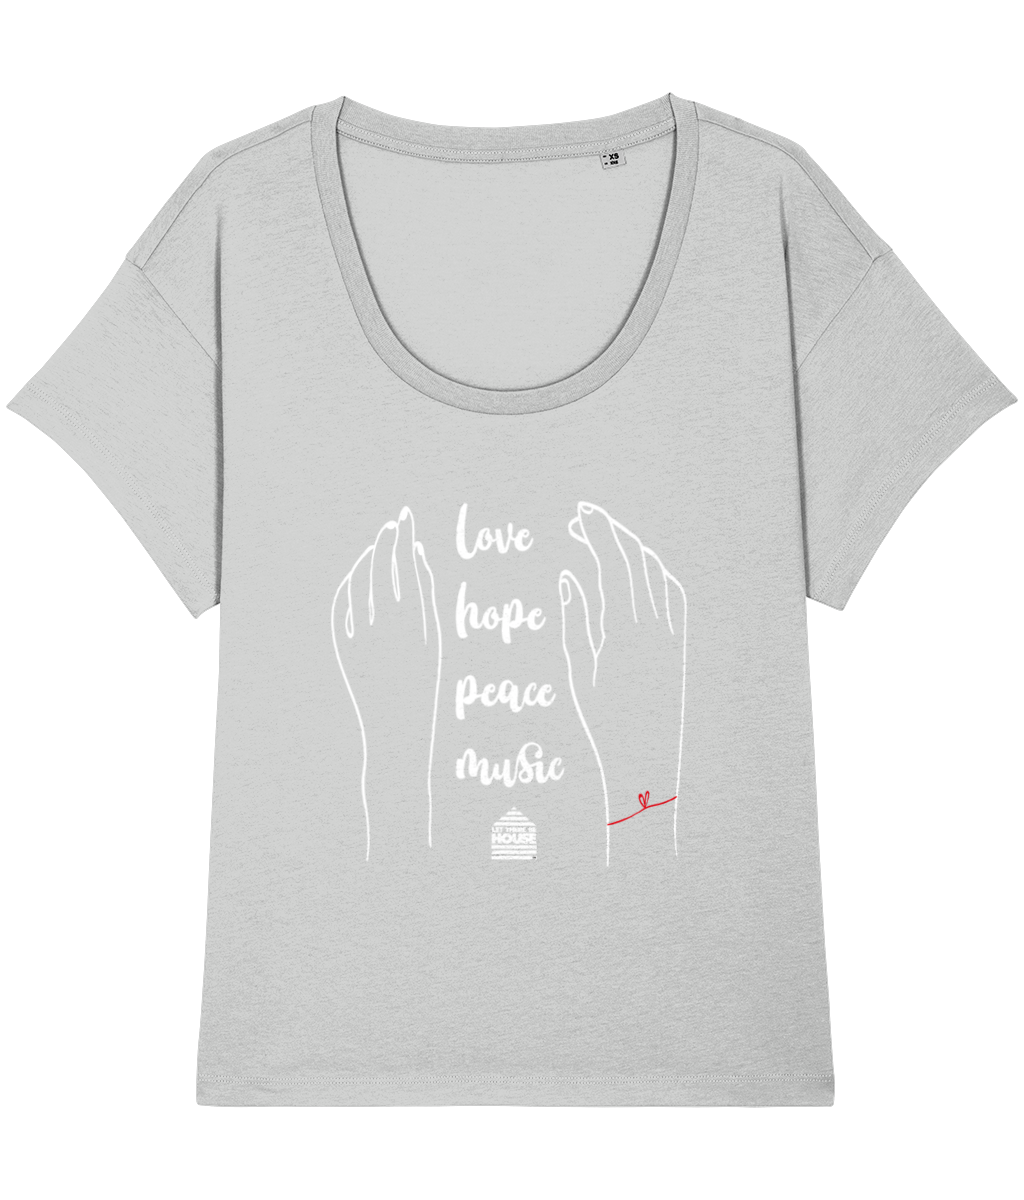 Women's Chiller T-Shirt Love Hands White